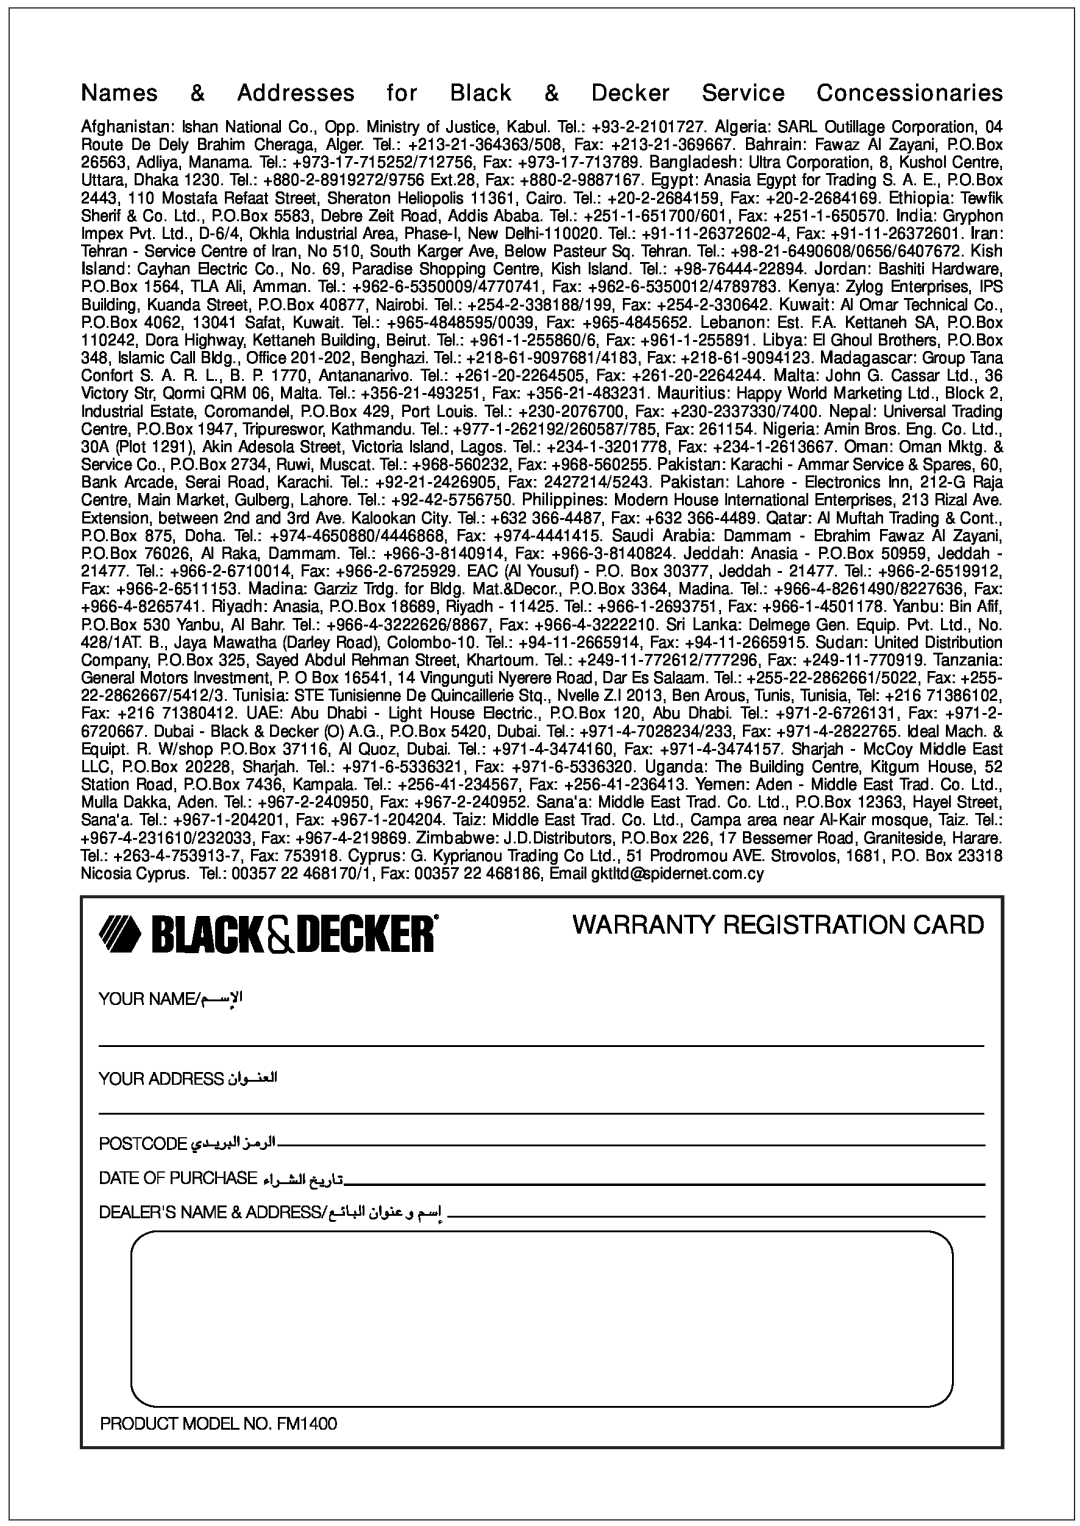 Black & Decker FM1400 manual Warranty Registration Card, Names & Addresses for Black & Decker Service Concessionaries 